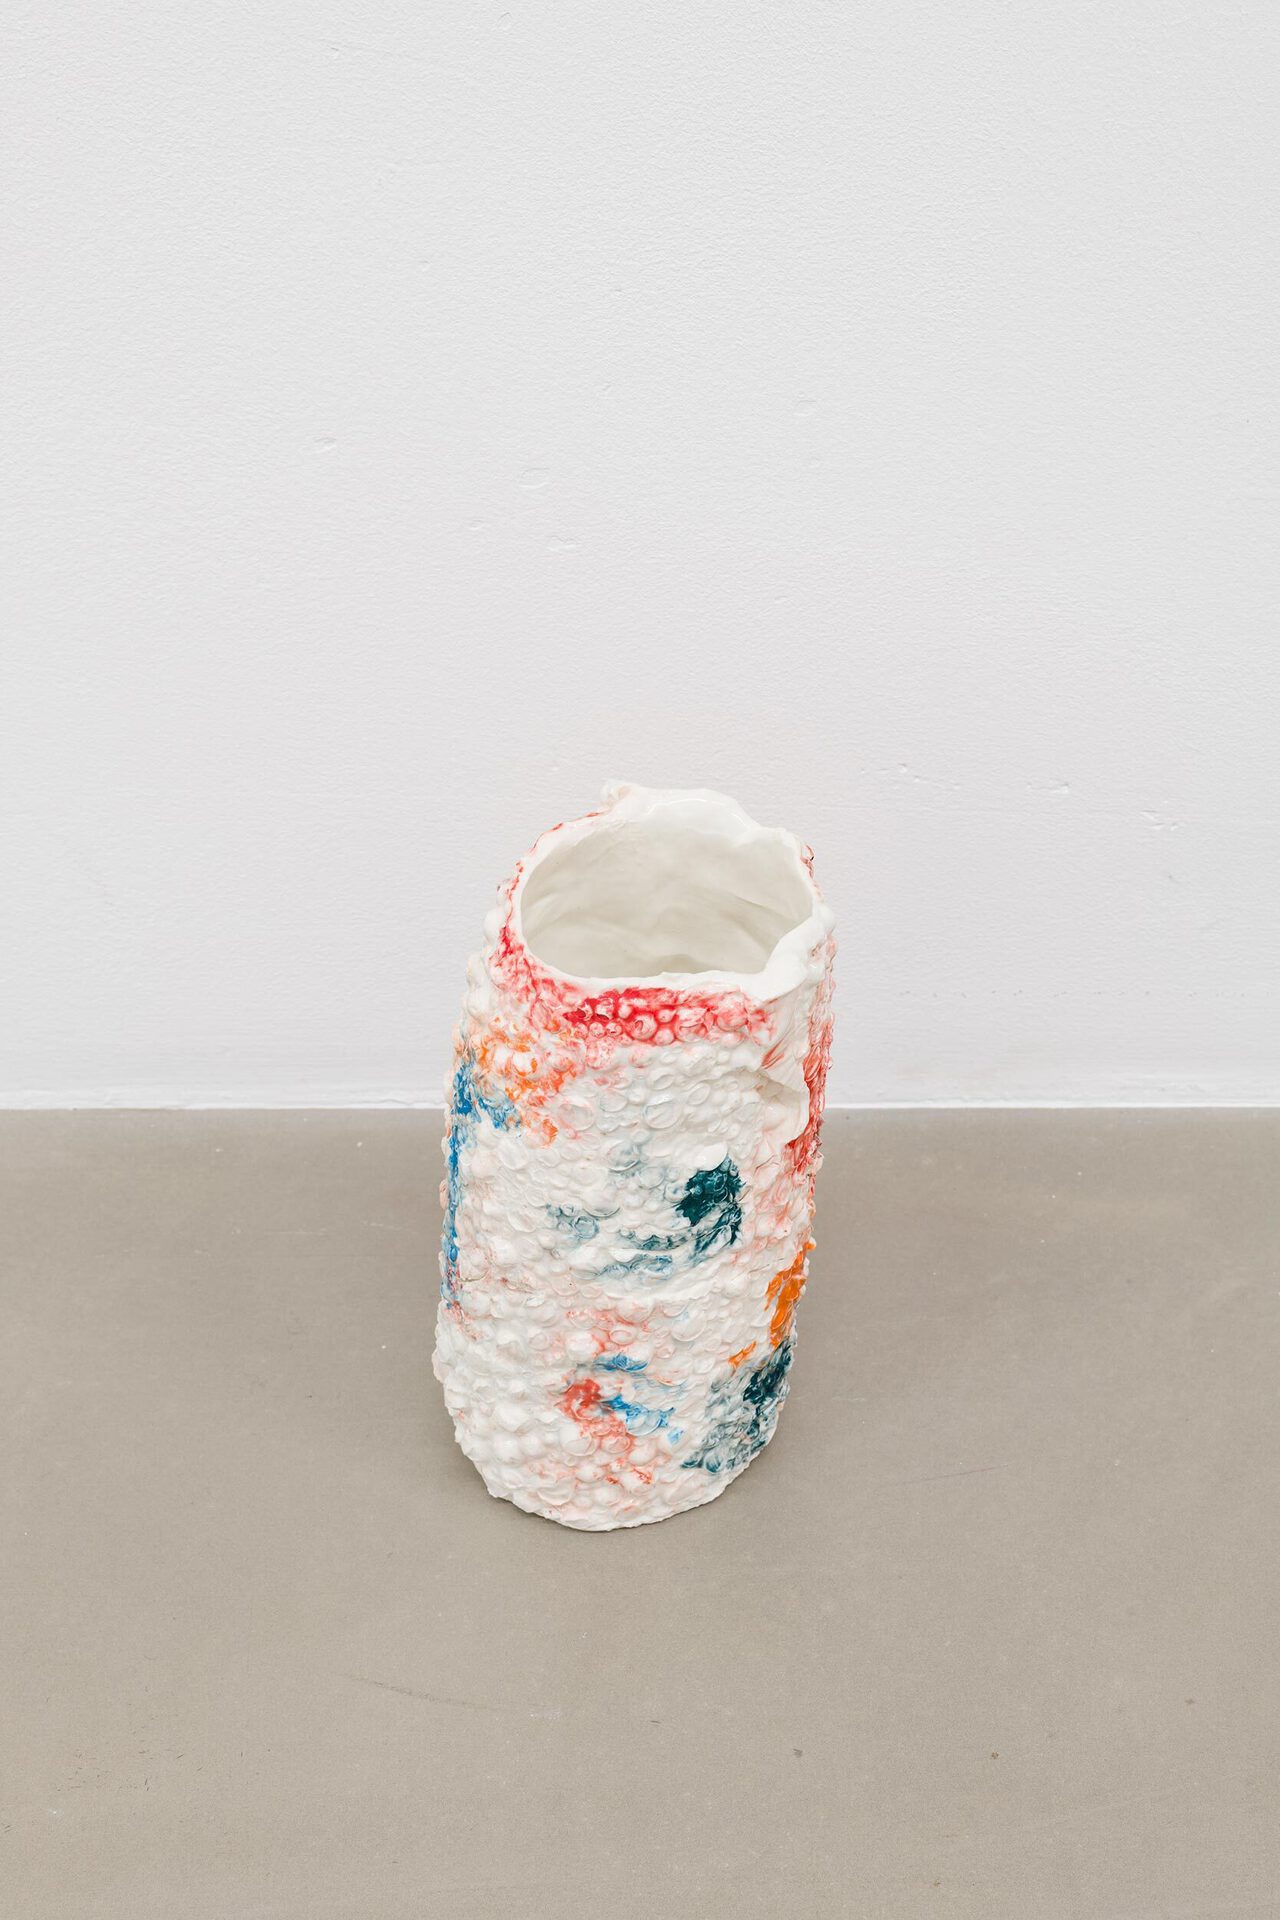 Johanna Magdalena Guggenberger, schmeeone, vase, 2022, glazed porcelain, 17 × 9 × 9 cm. Courtesy Wonnerth Dejaco, Belmacz and the artist. Photo: Peter Mochi